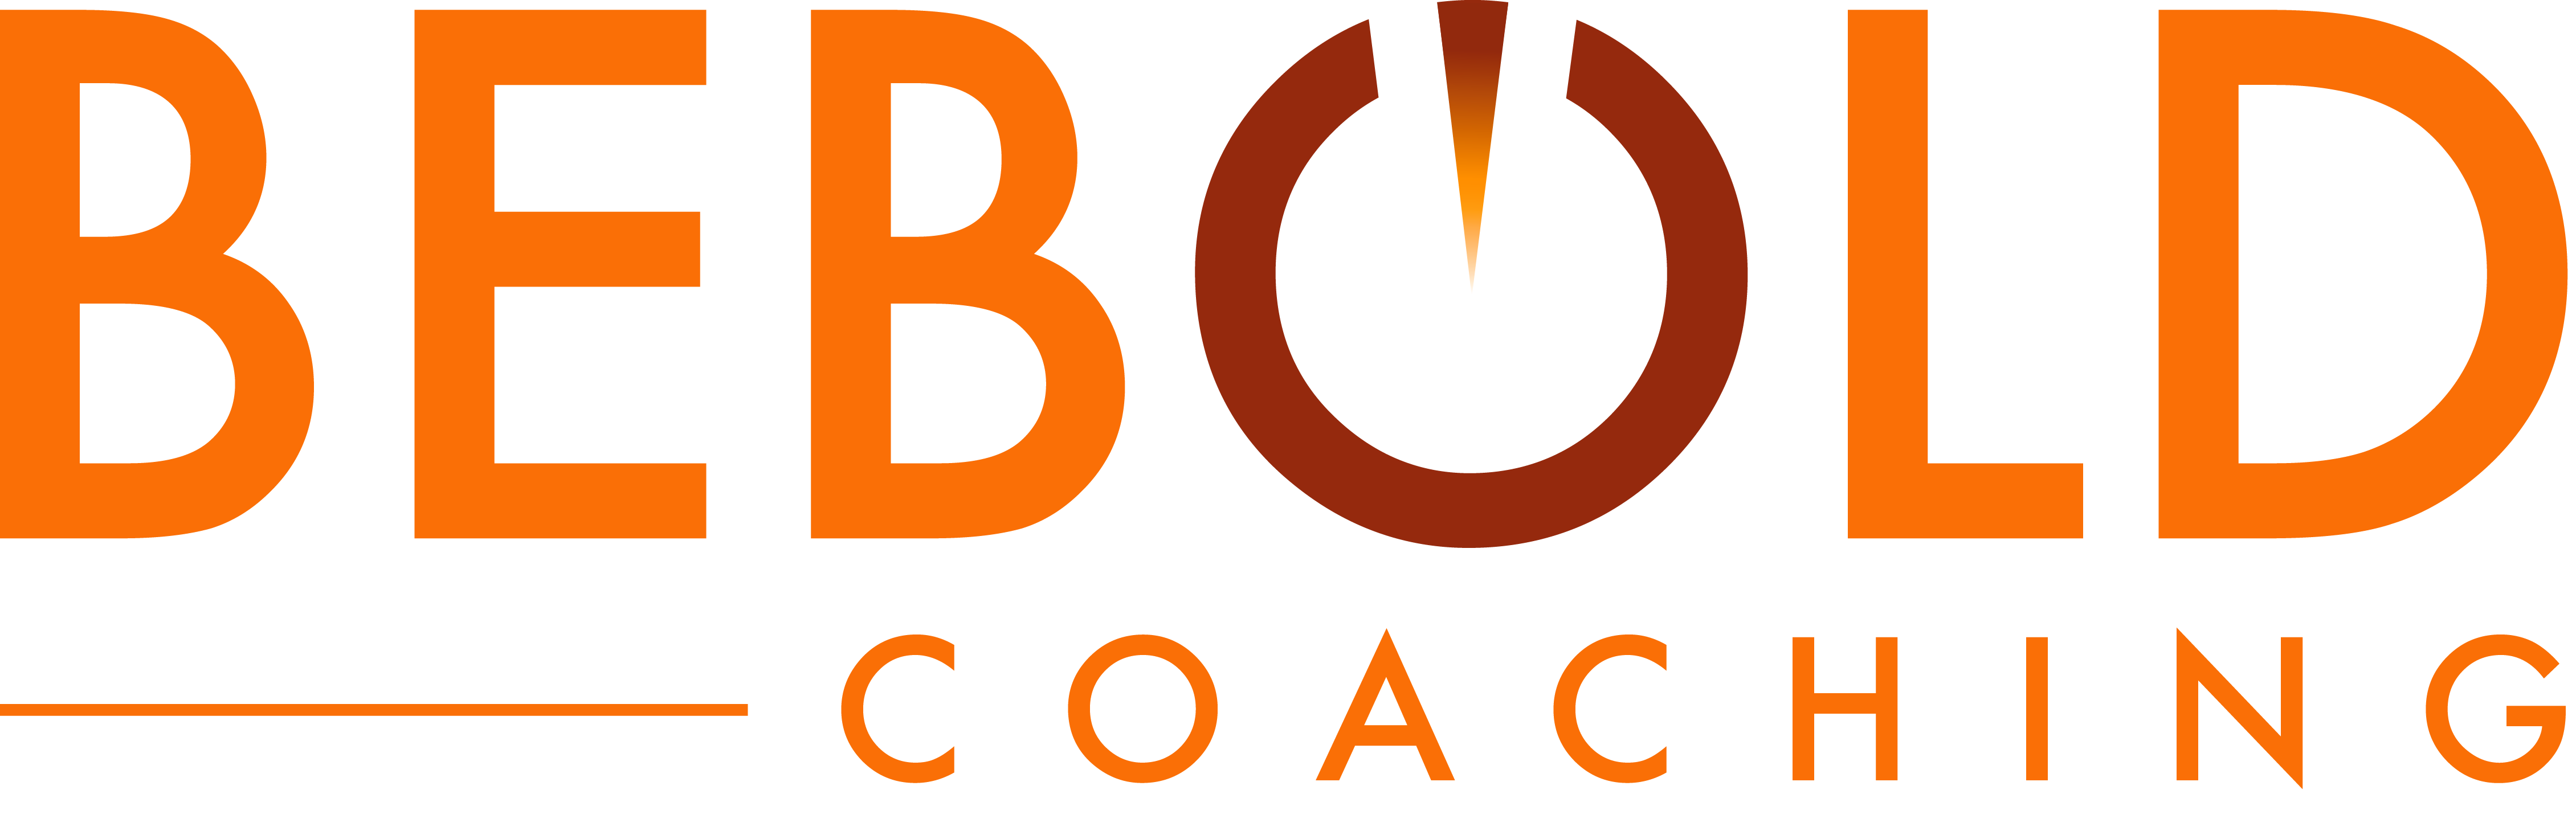 Bebold Coaching